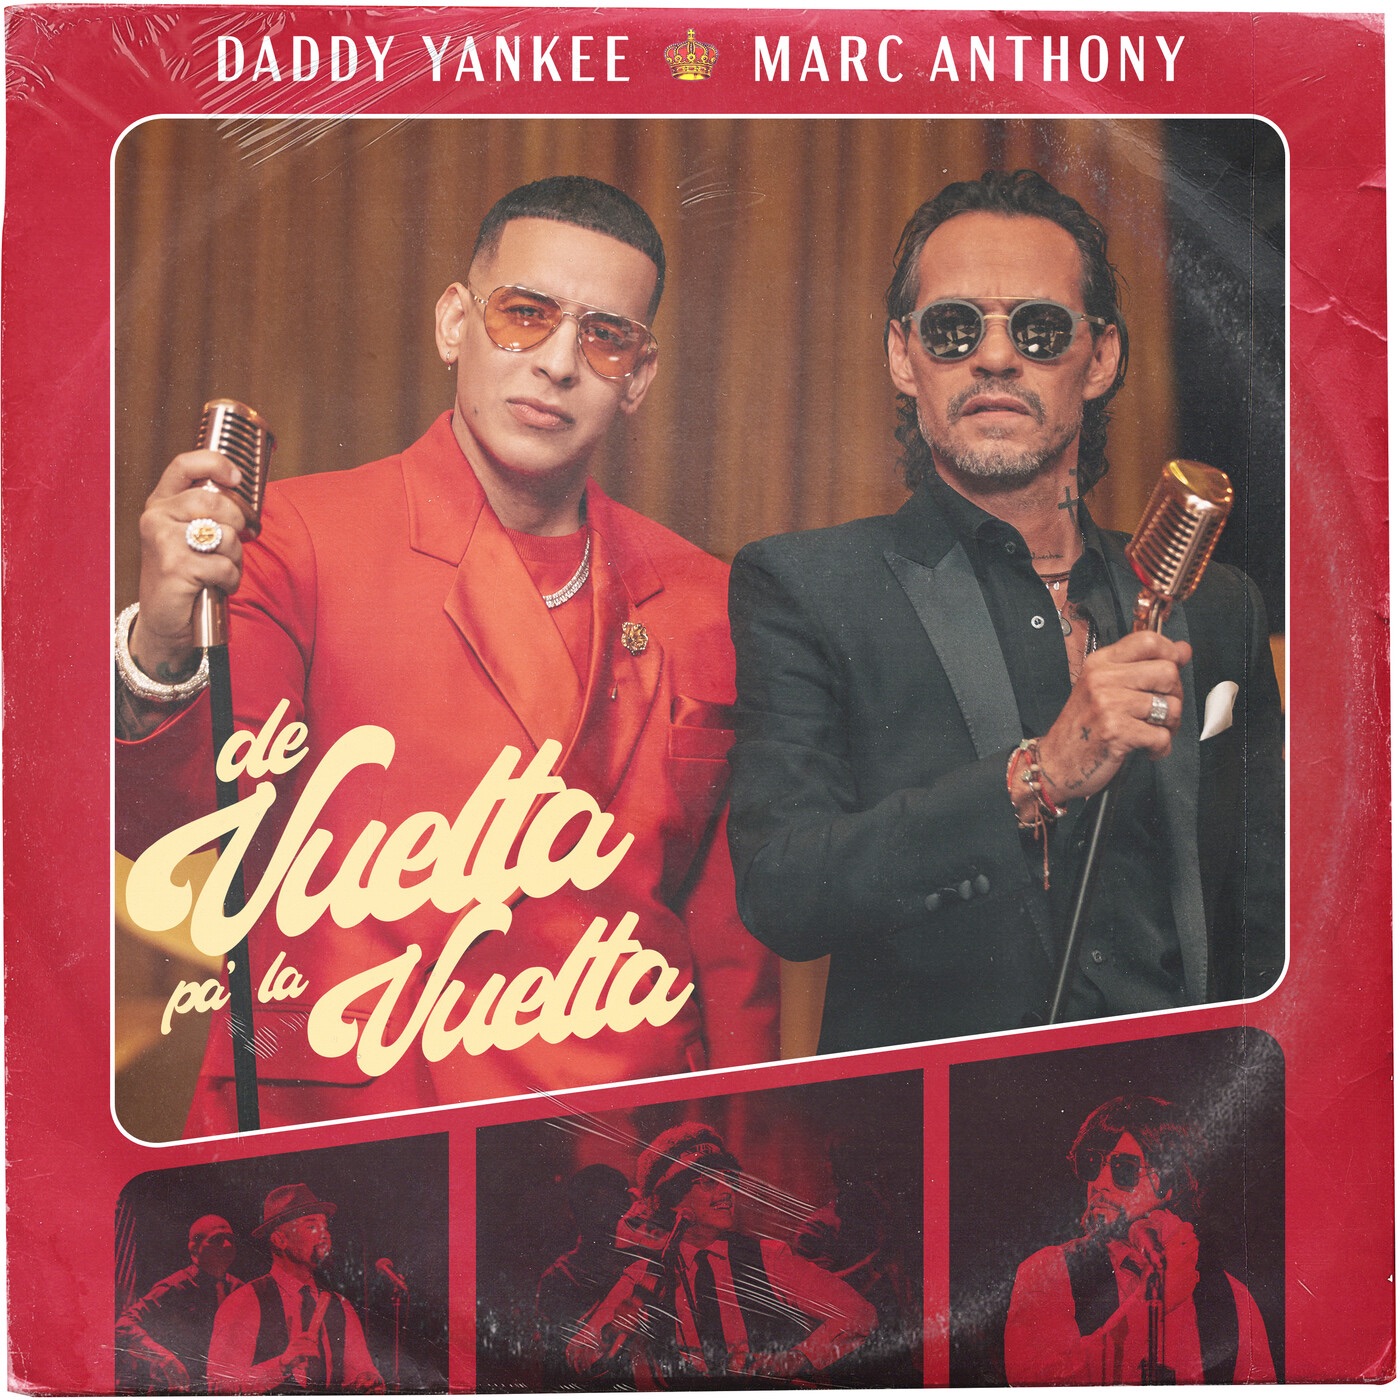 Daddy Yankee & Marc Anthony - De Vuelta Pa' La Vuelta - Single